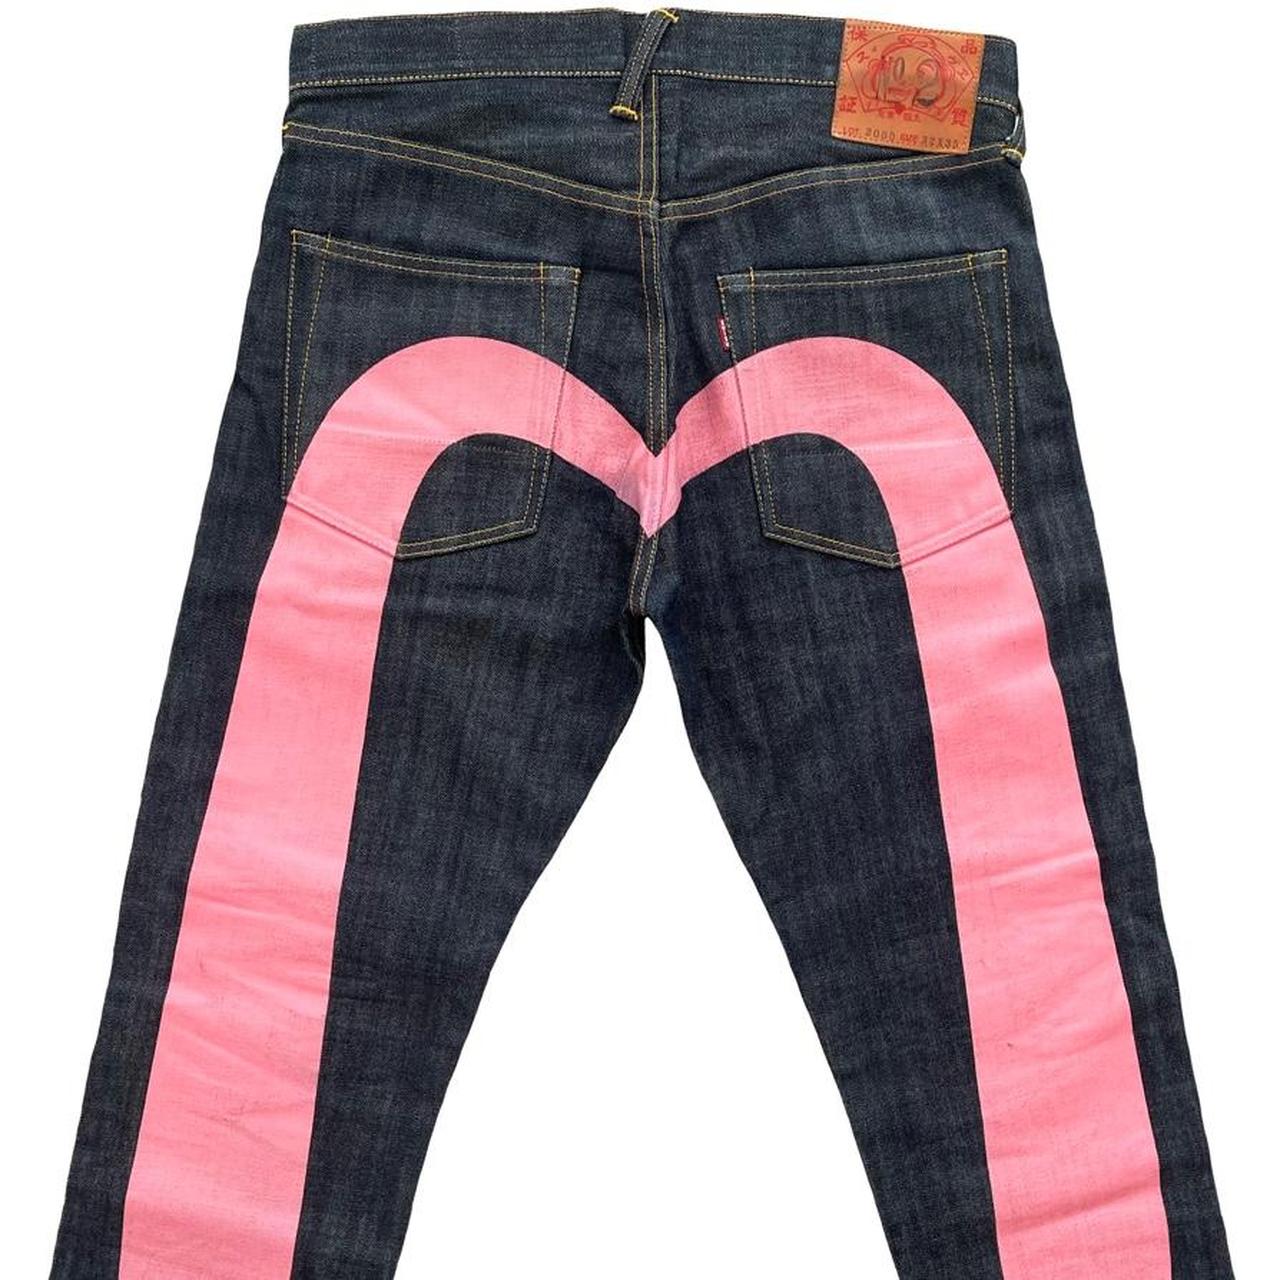 Evisu Daicock Jeans